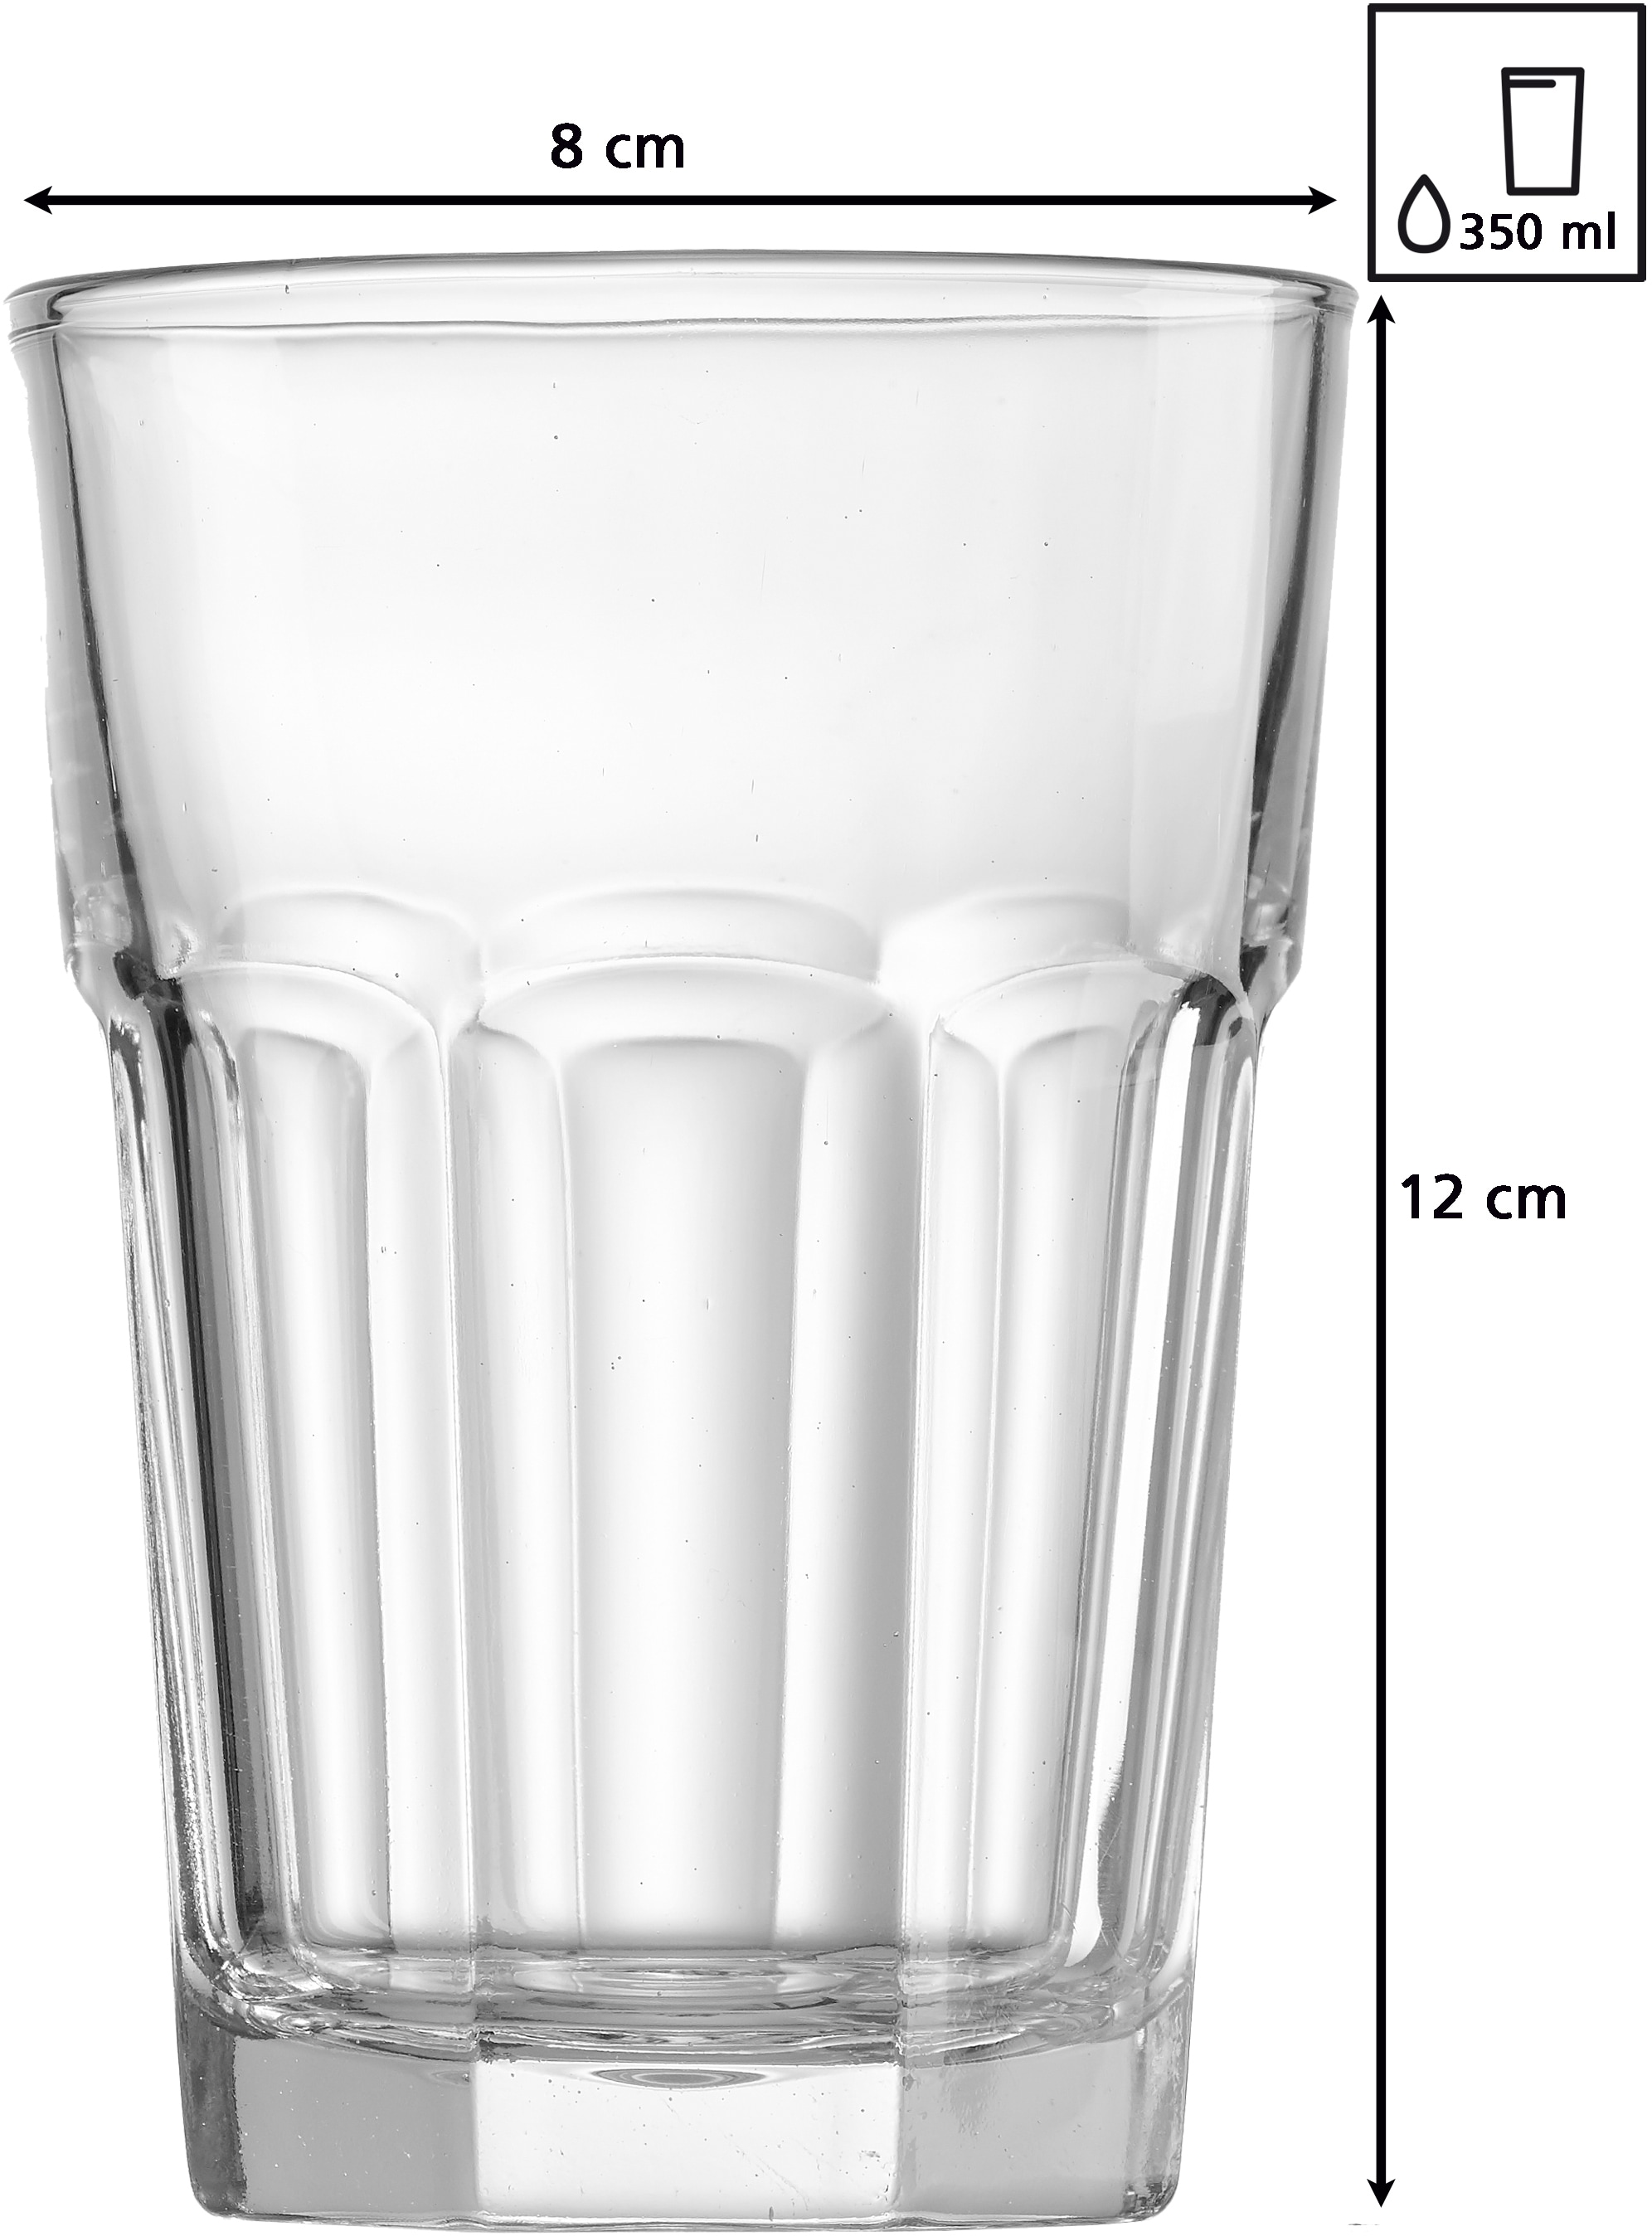 Ritzenhoff & Breker Gläser-Set »Riad«, (Set, 6 tlg., Das Set besteht aus 6 Longdrinkgläsern), Facetten-Optik, 6-teilig